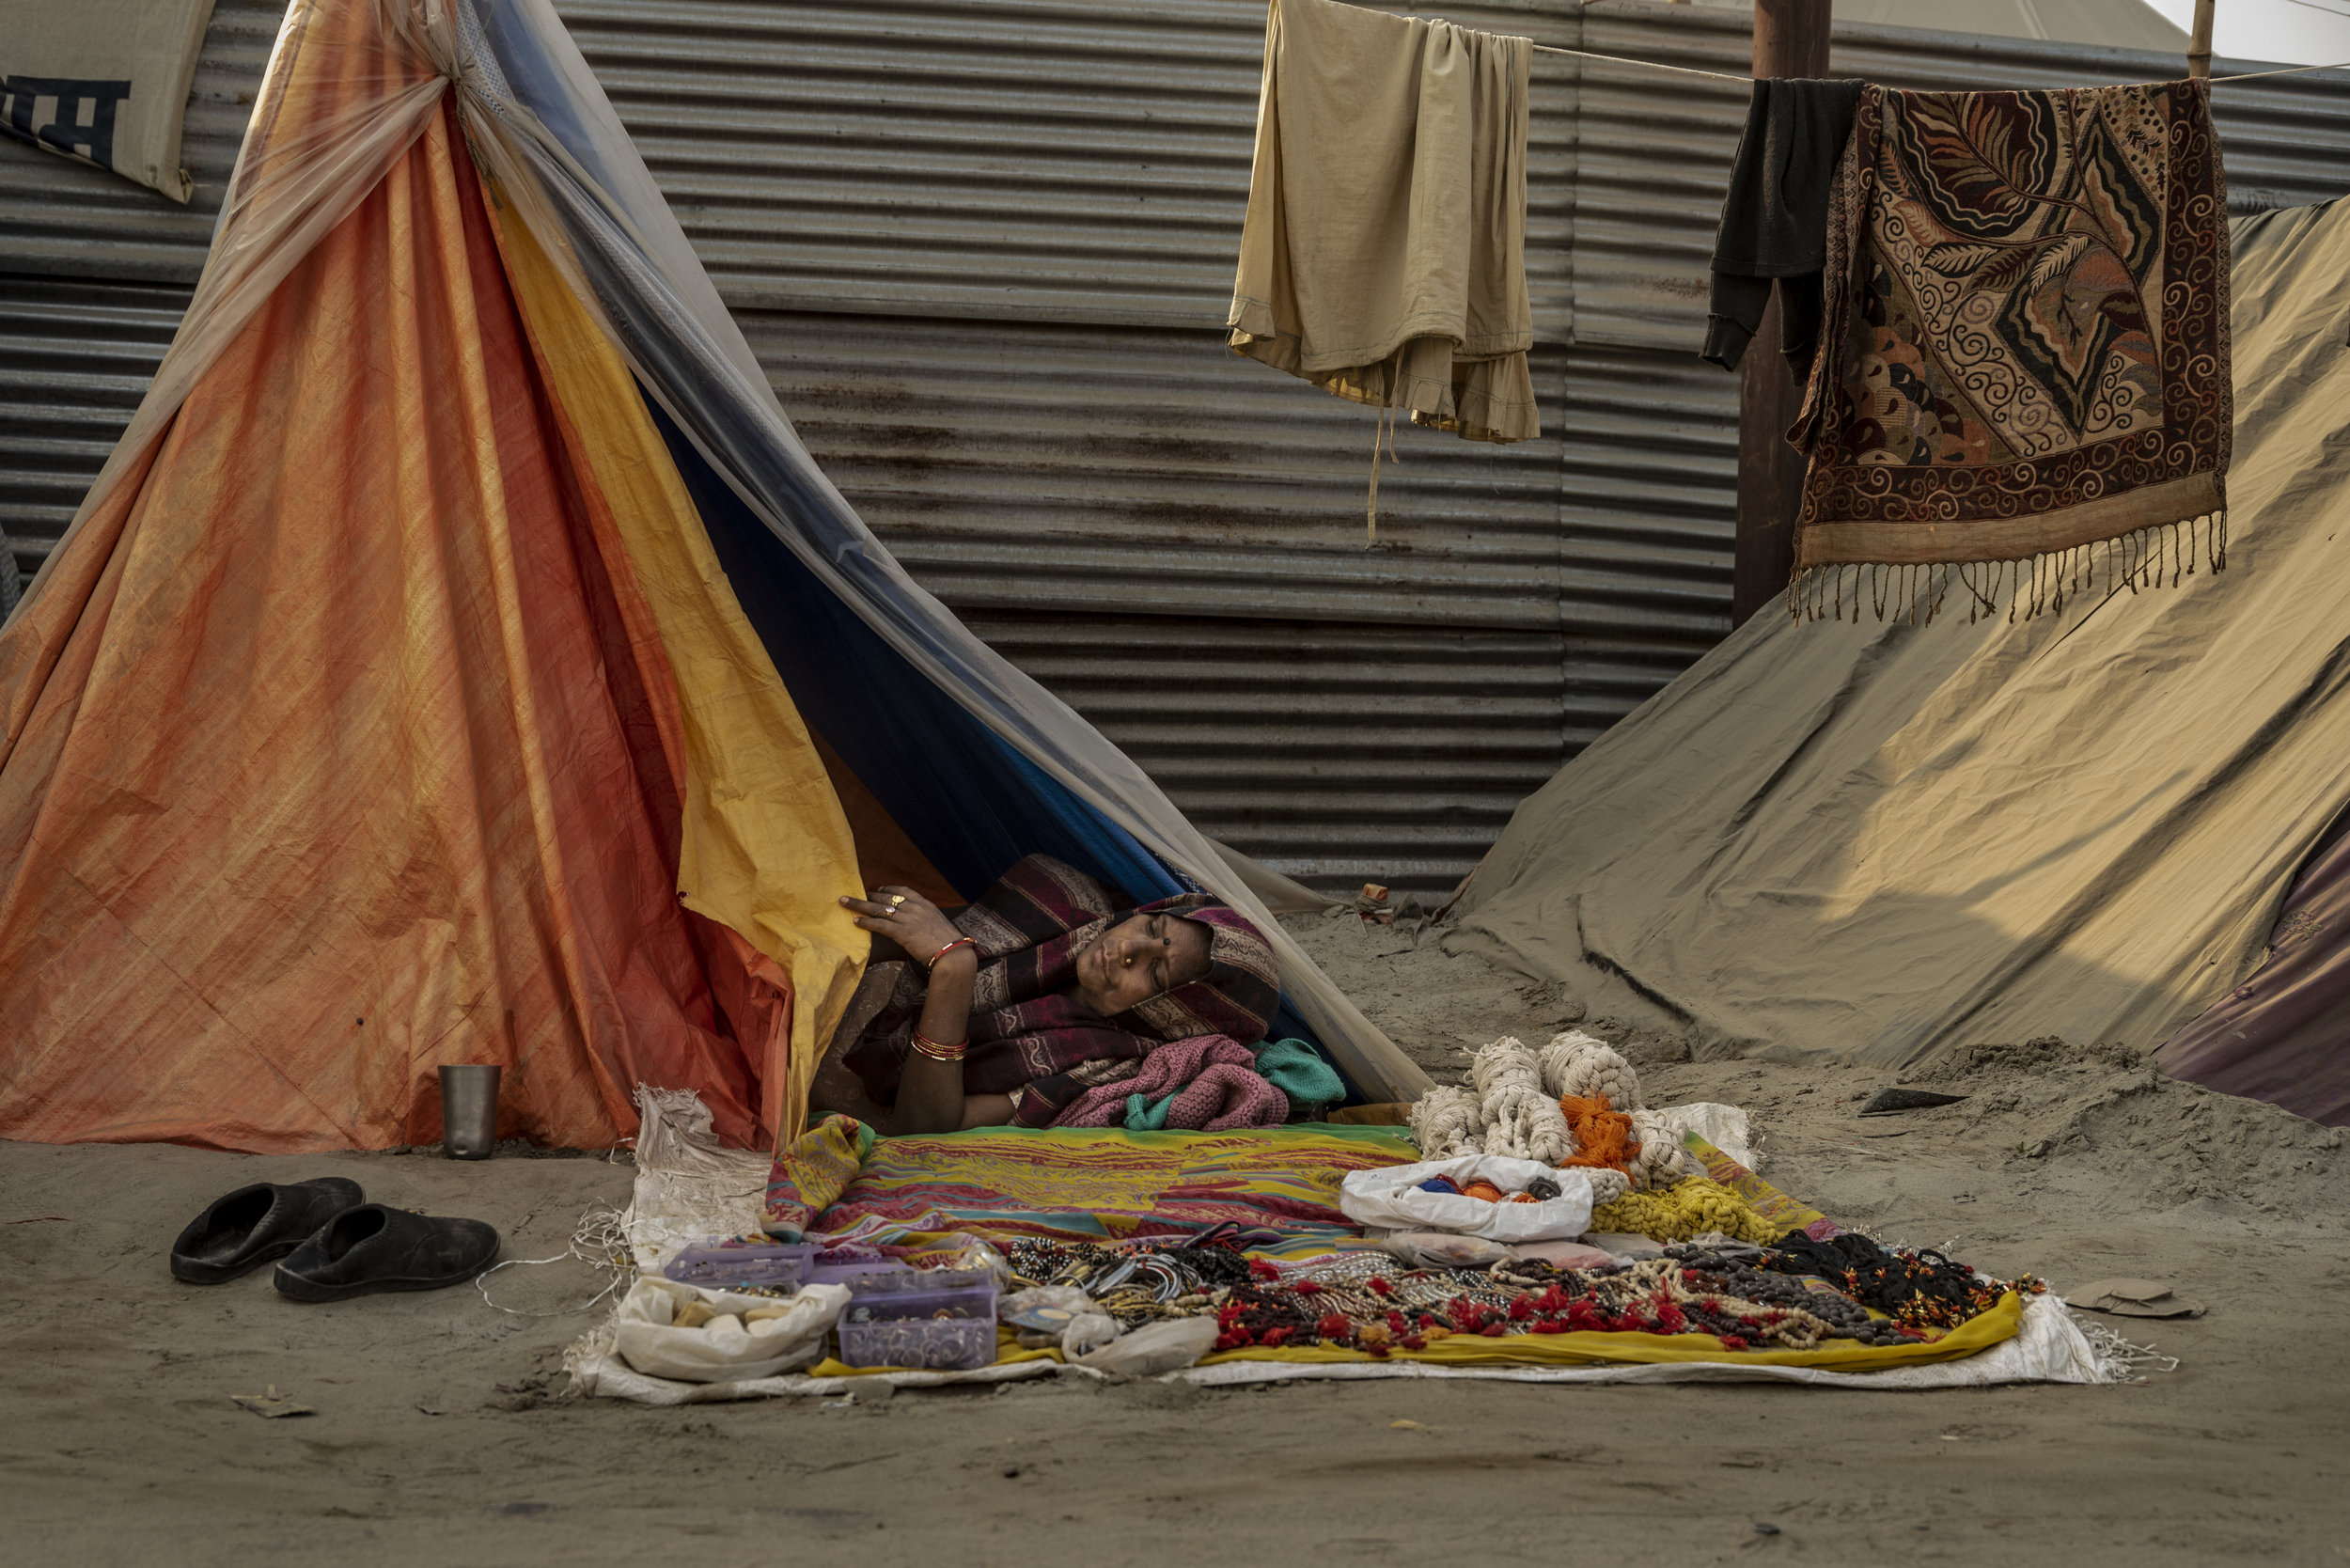  Women sleeps in here roadside tent as she sells wares. 